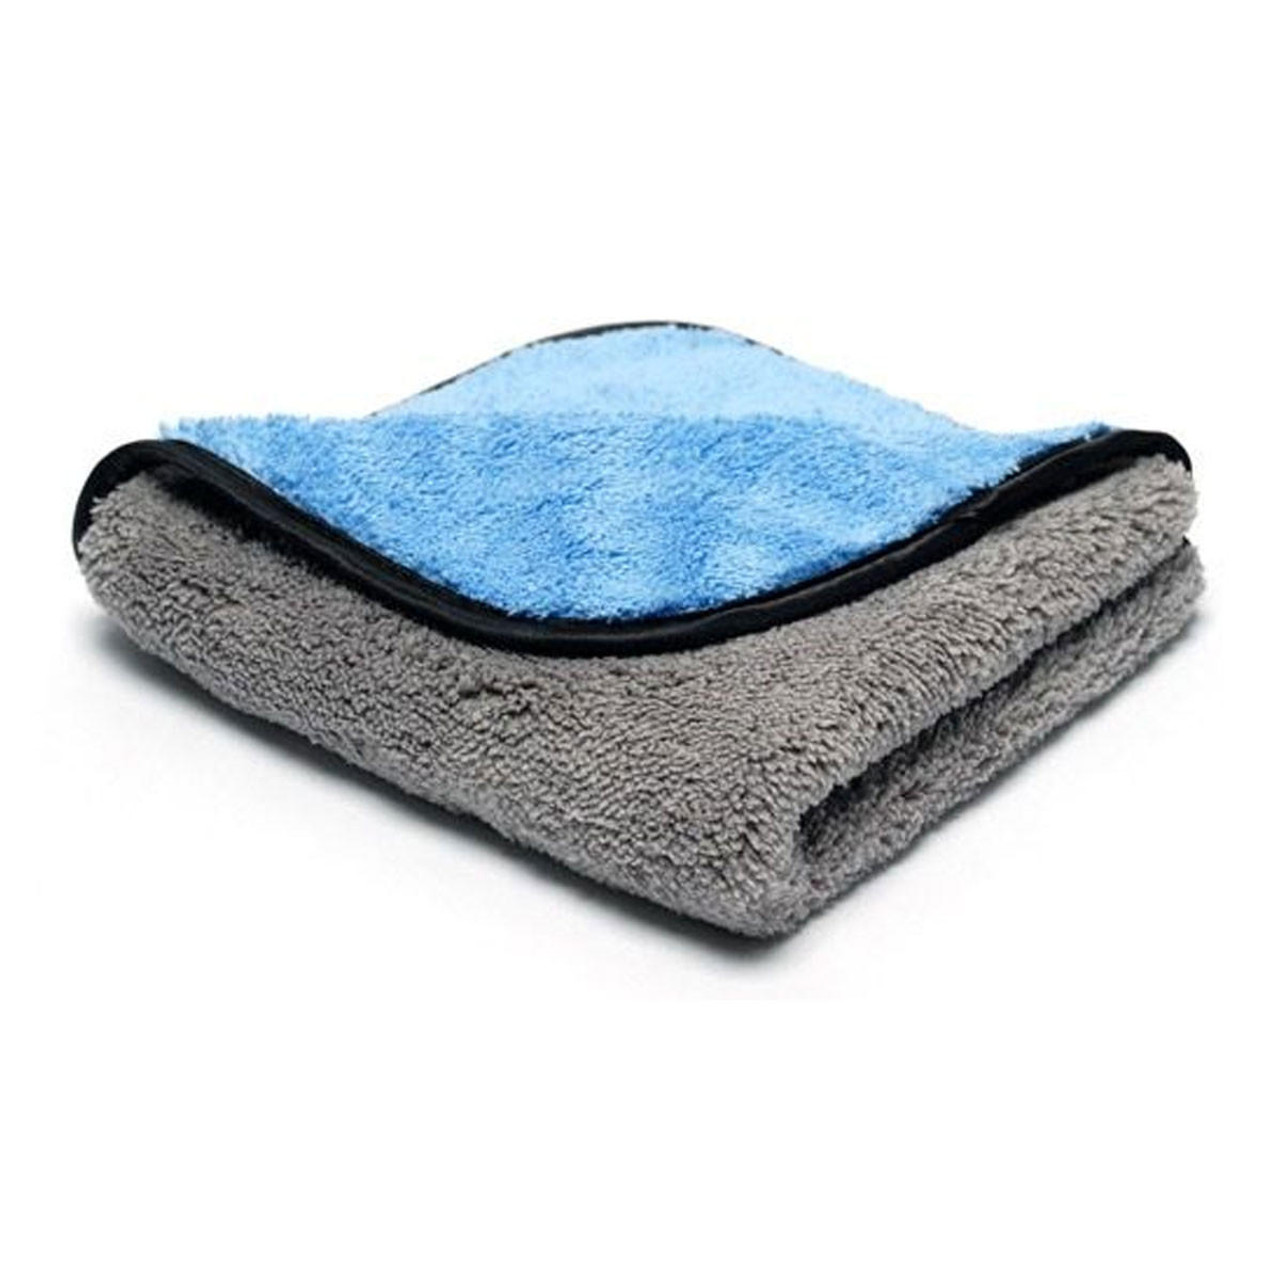 Dry Shine Waterless Car Wash and Wax, Dual Pile Microfiber Towel 2